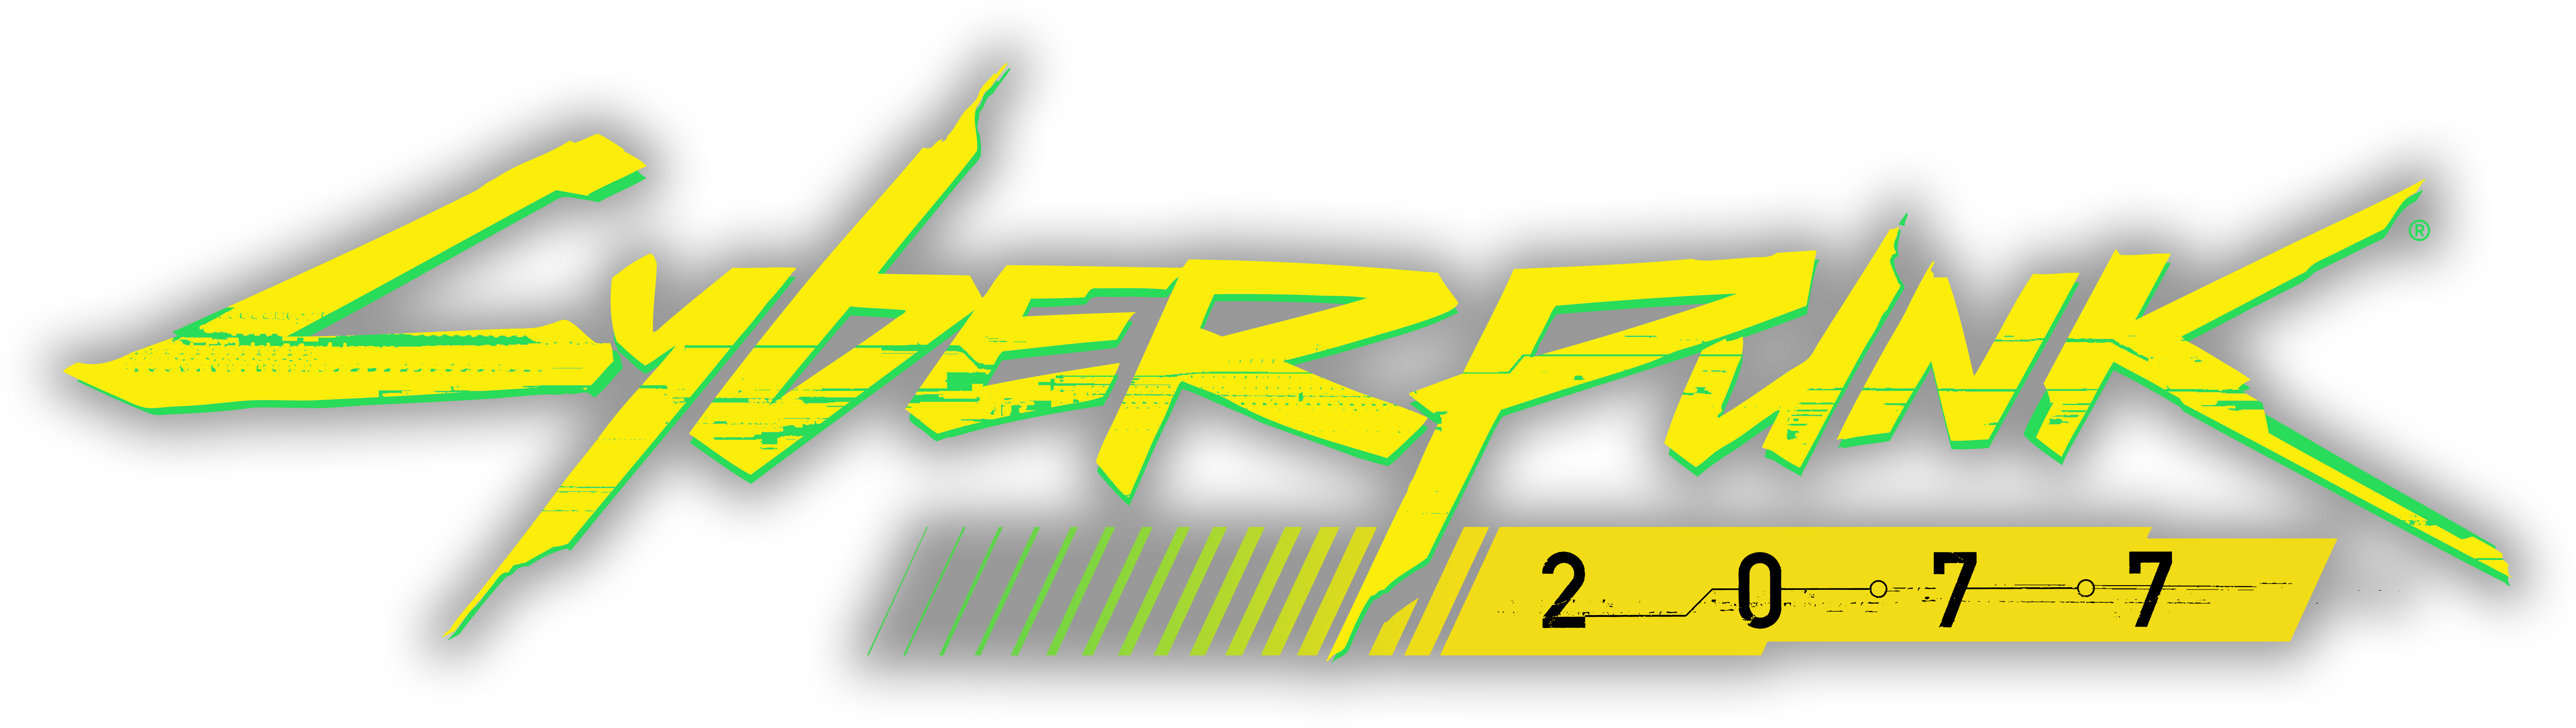 Cyberpunk logo effect фото 18